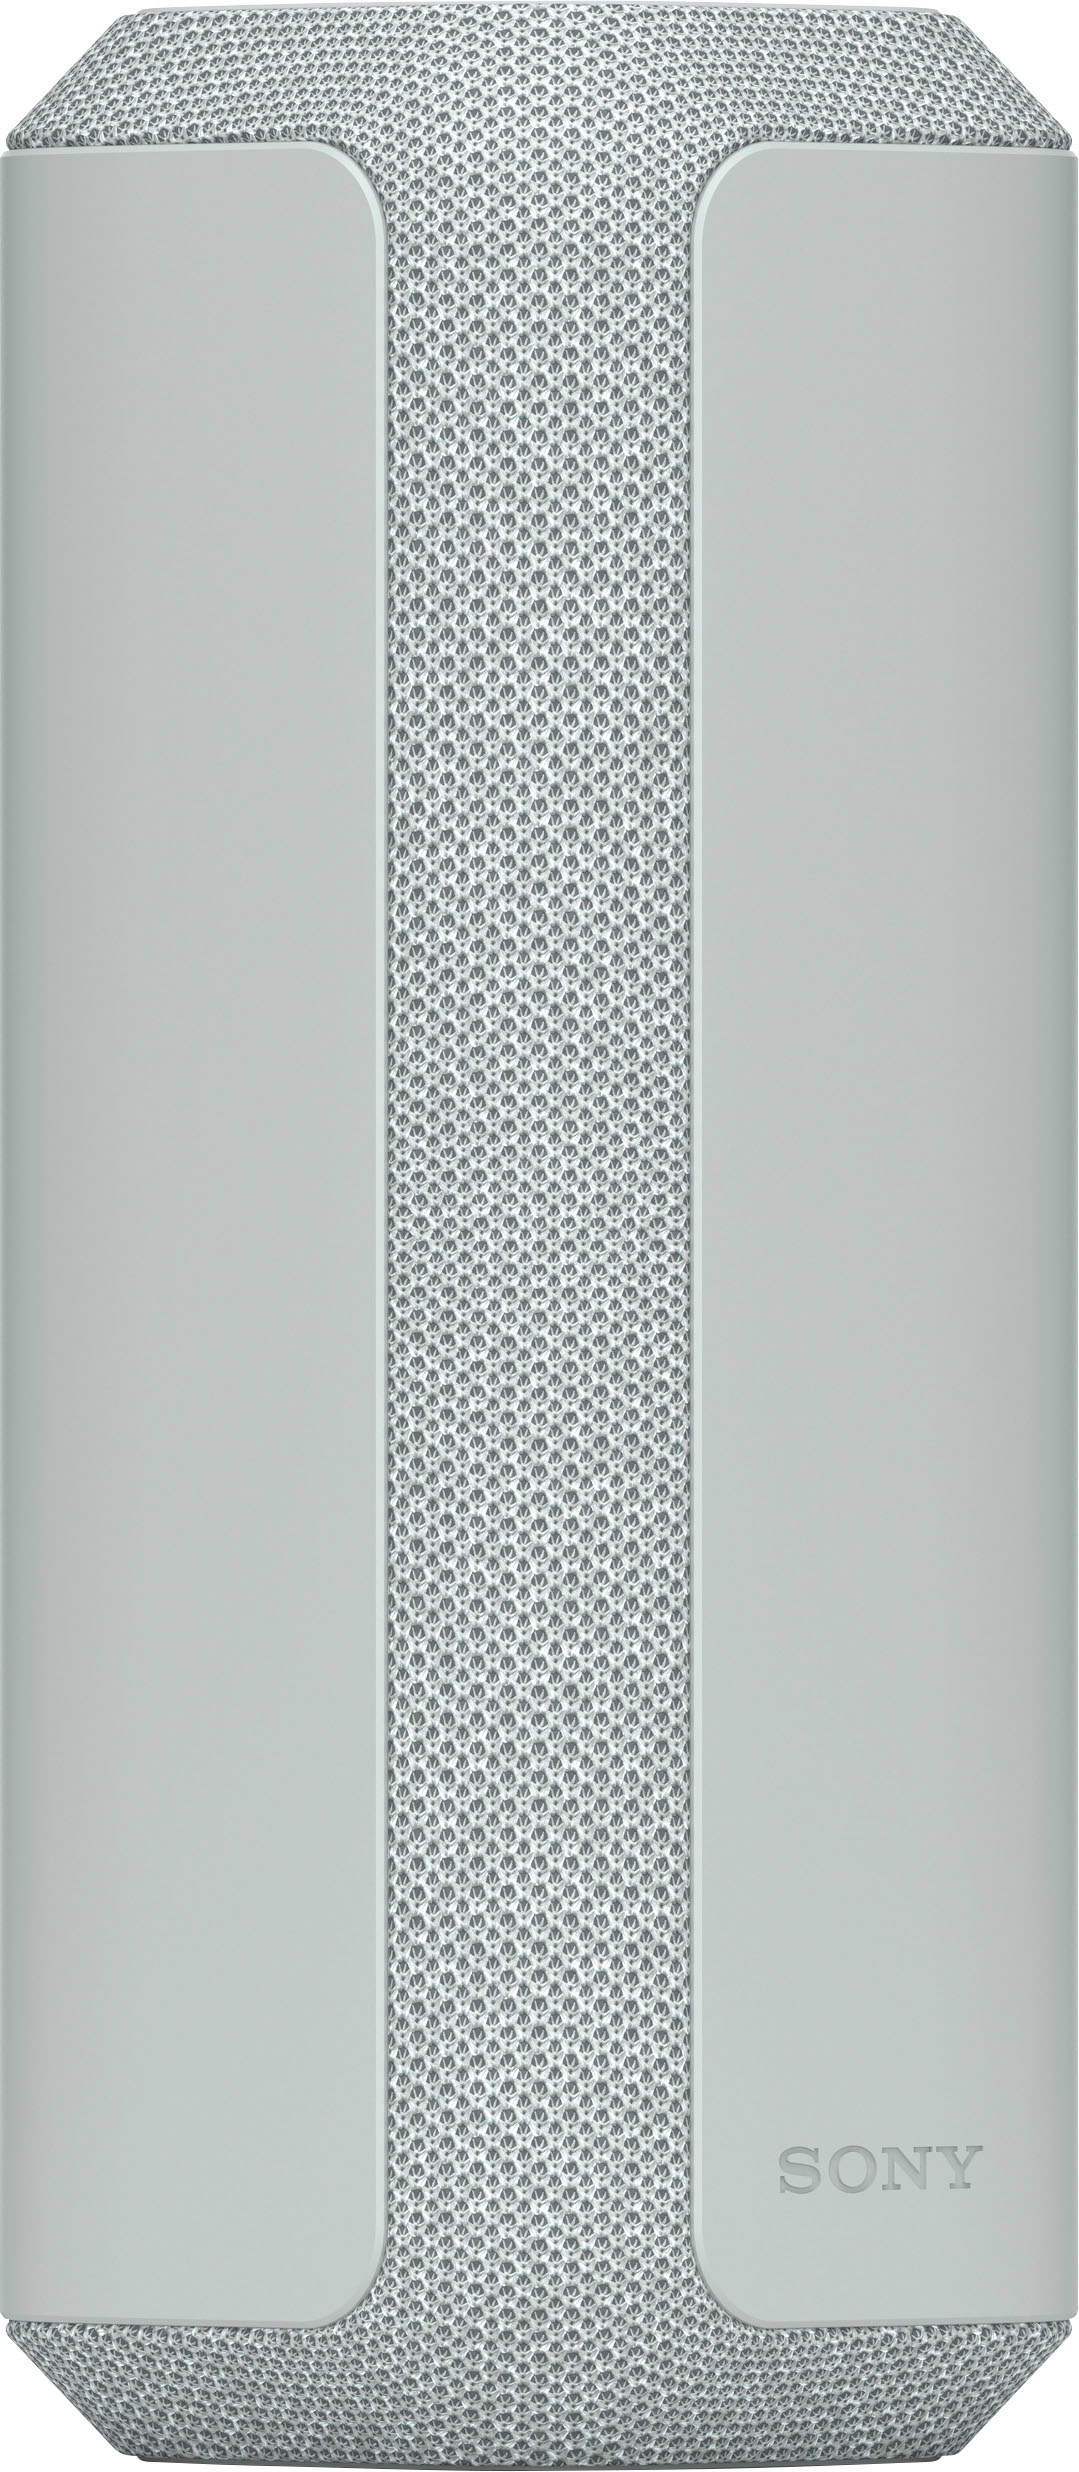 Sony XE300 Portable Waterproof and Dustproof Bluetooth Speaker Light Gray  SRSXE300/HZ - Best Buy